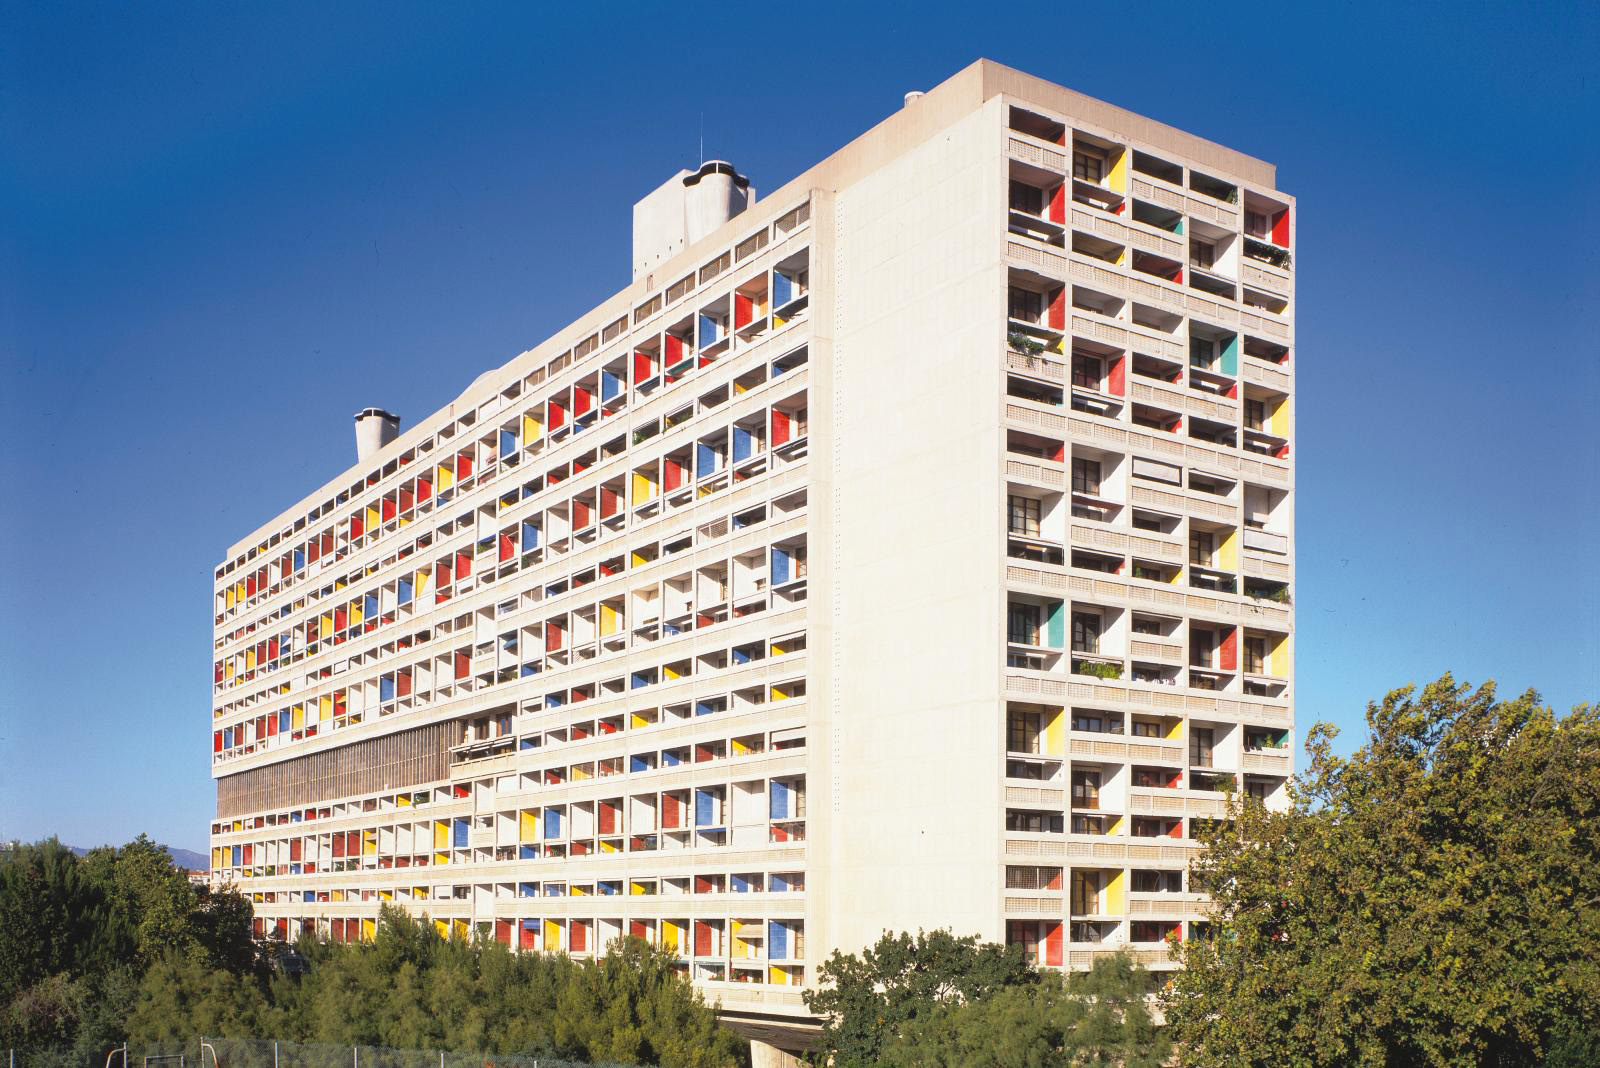 Le Corbusier's Cité Radieuse in Marseille: The End of a Utopia?